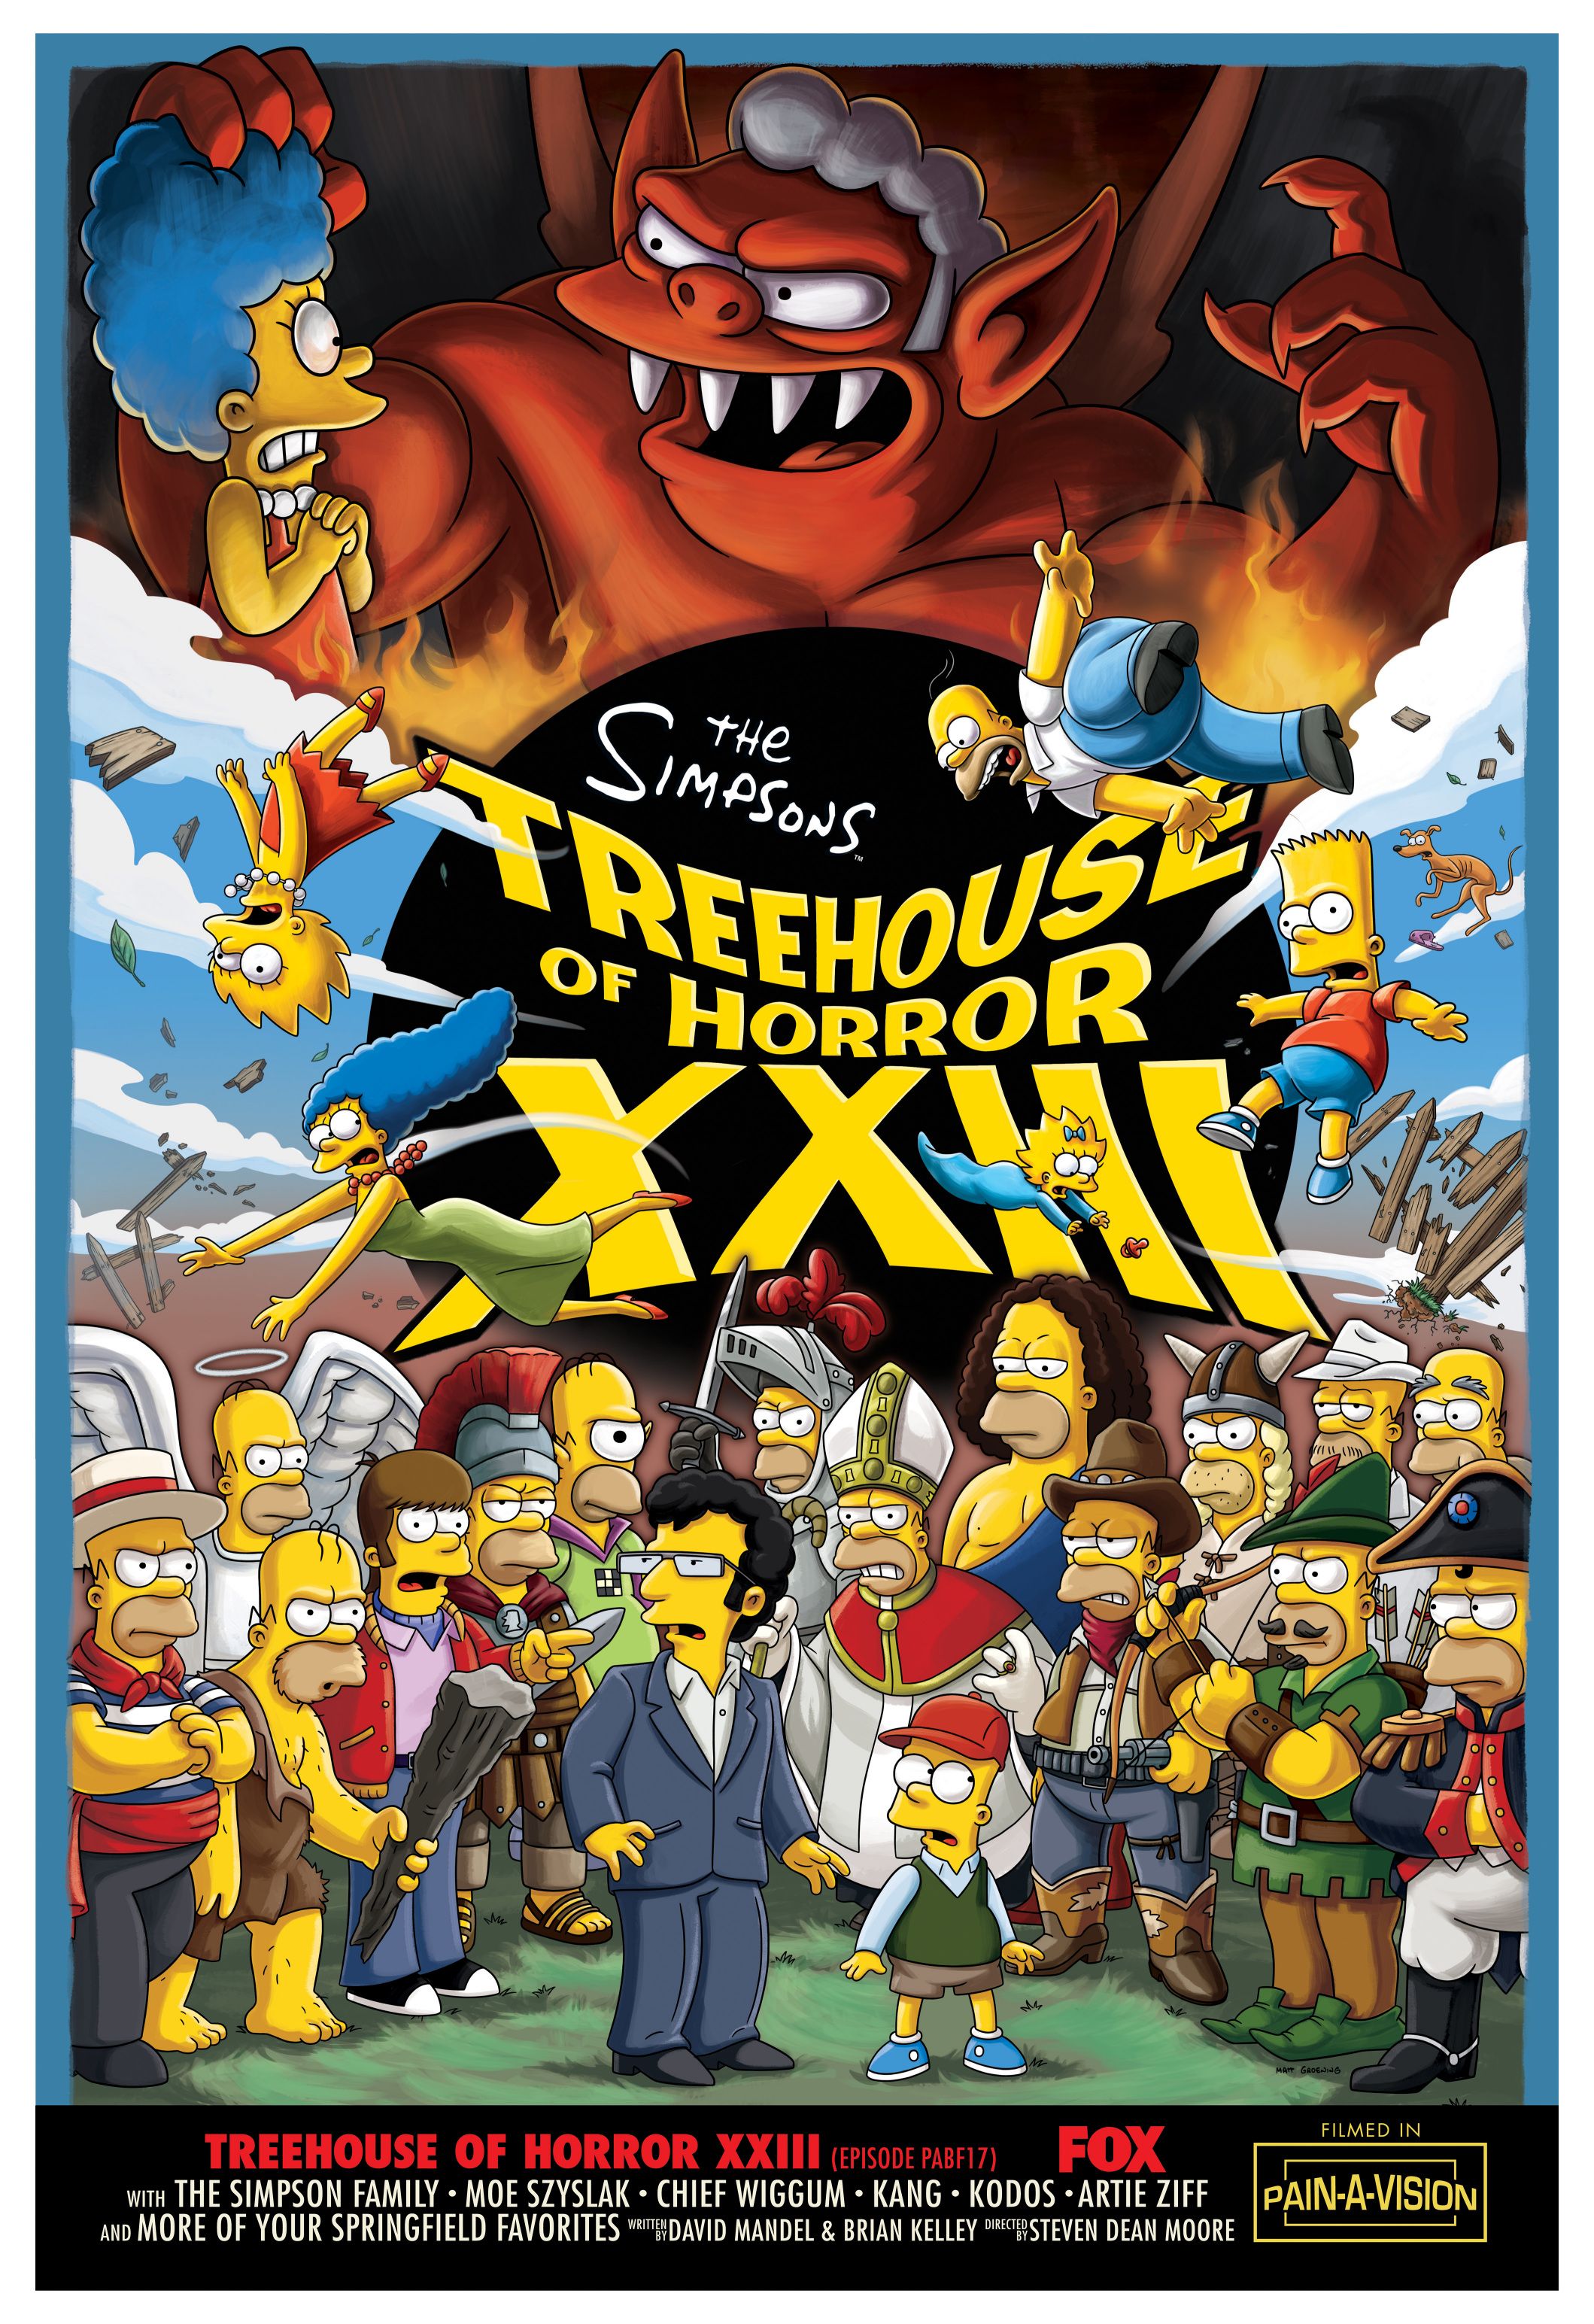 The Simpsons Halloween Episode - Treehouse of Horror XXIII